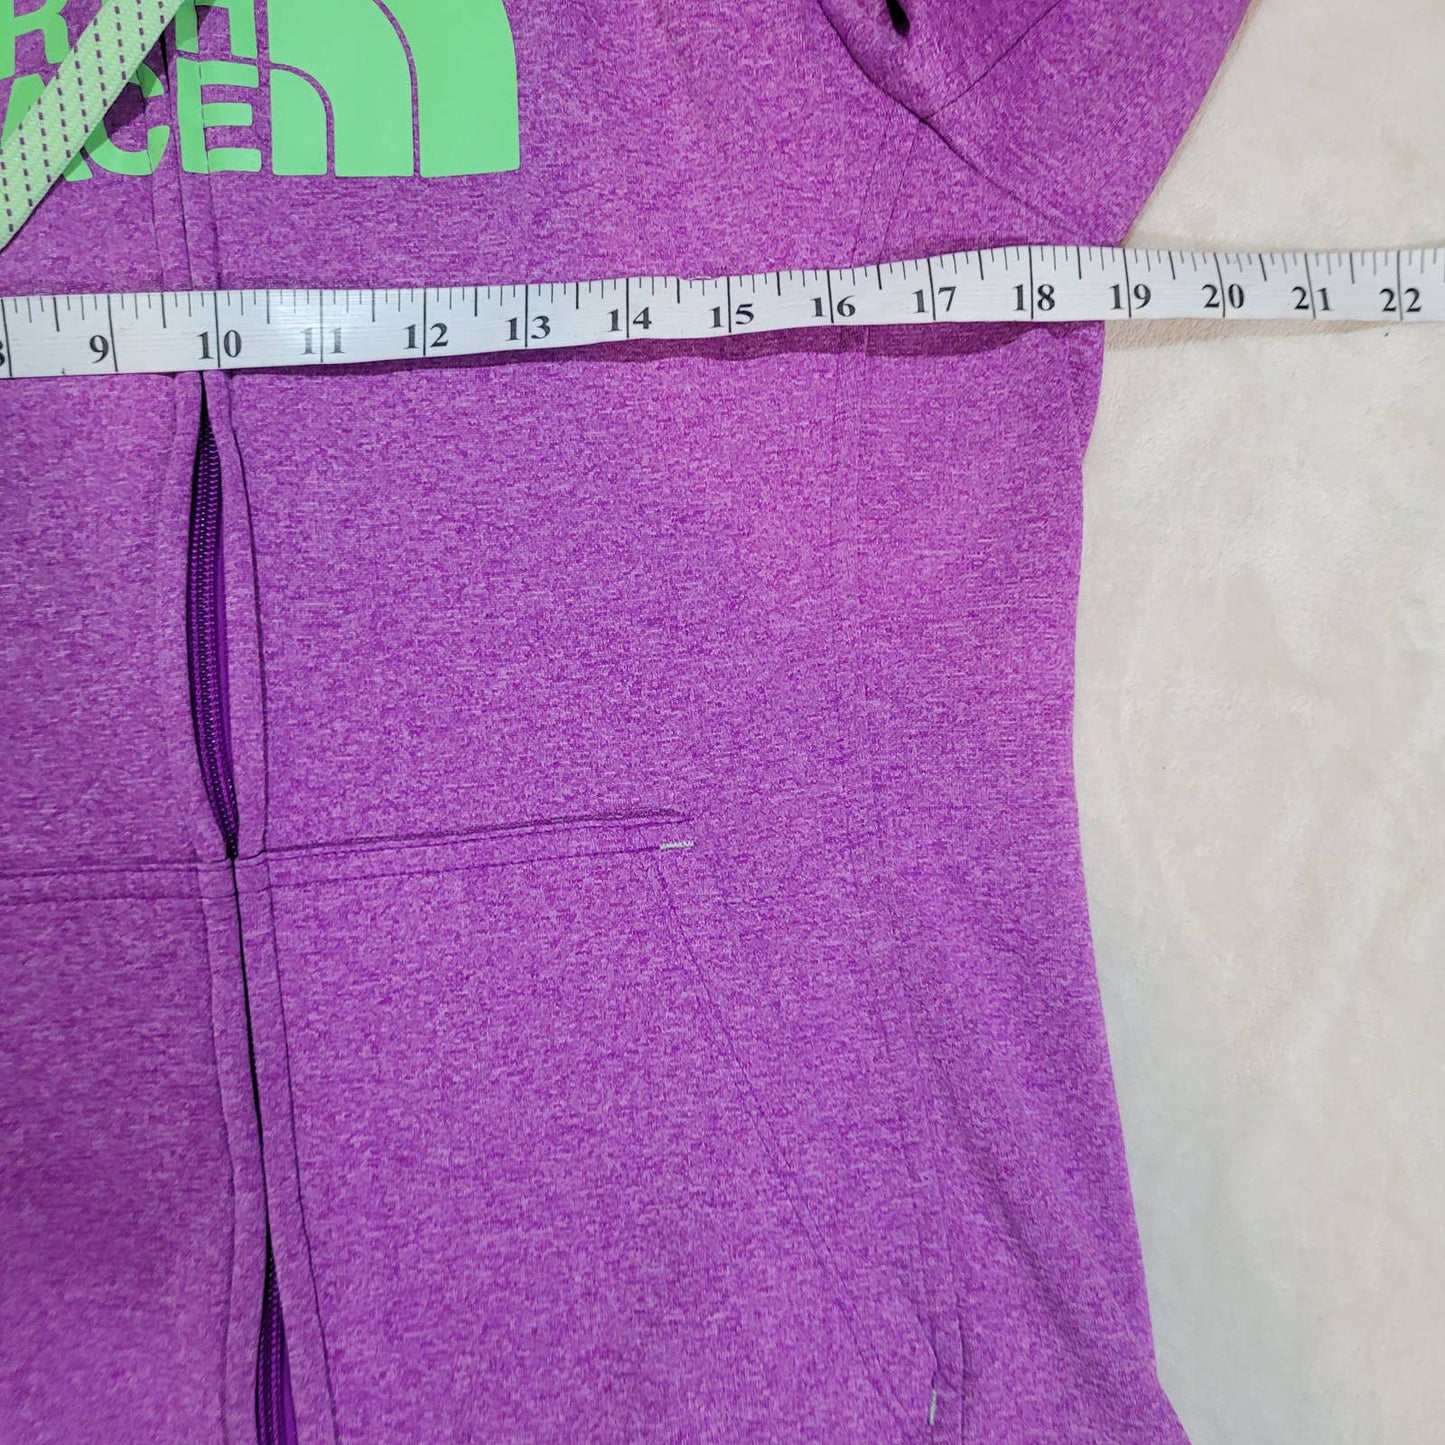 The North Face Purple Full Zip Hoody - Size Medium